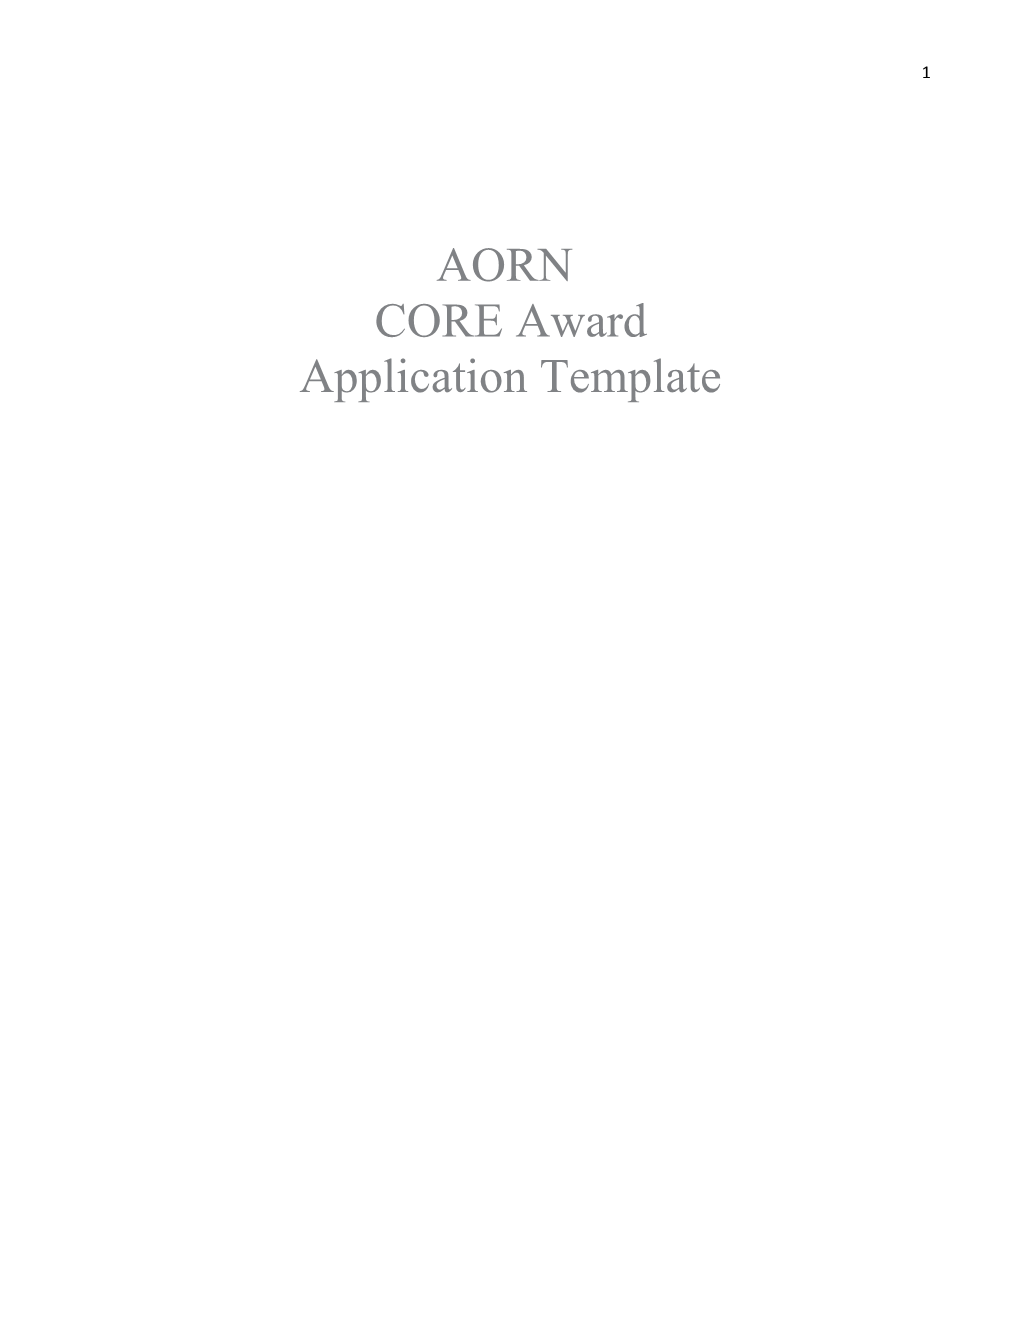 CORE Award Application